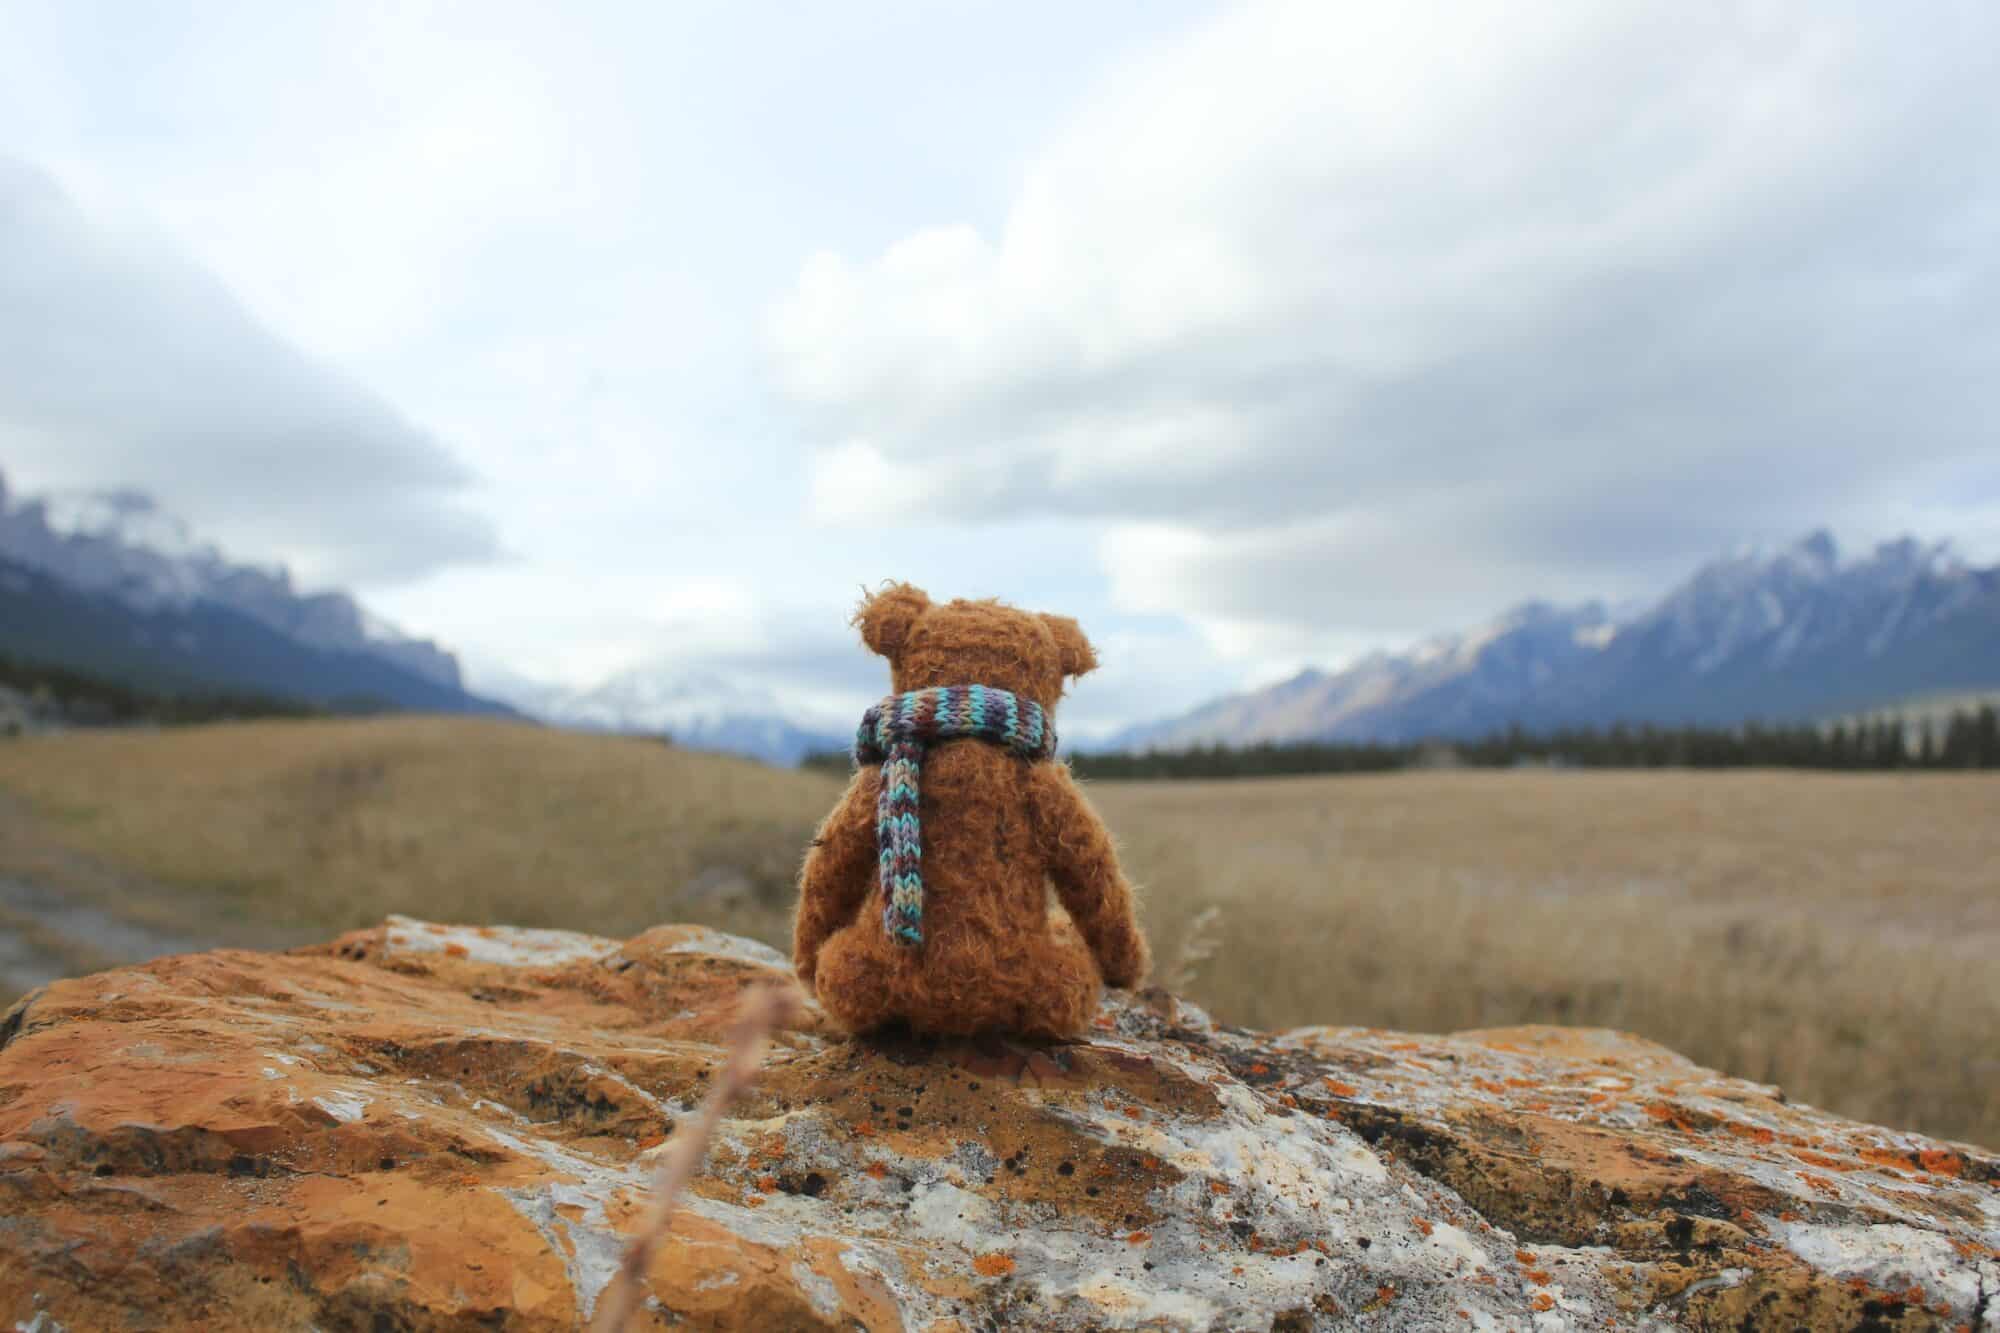 A lone teddy bear wrapped in scarf looks on Treaty 7 Territory.